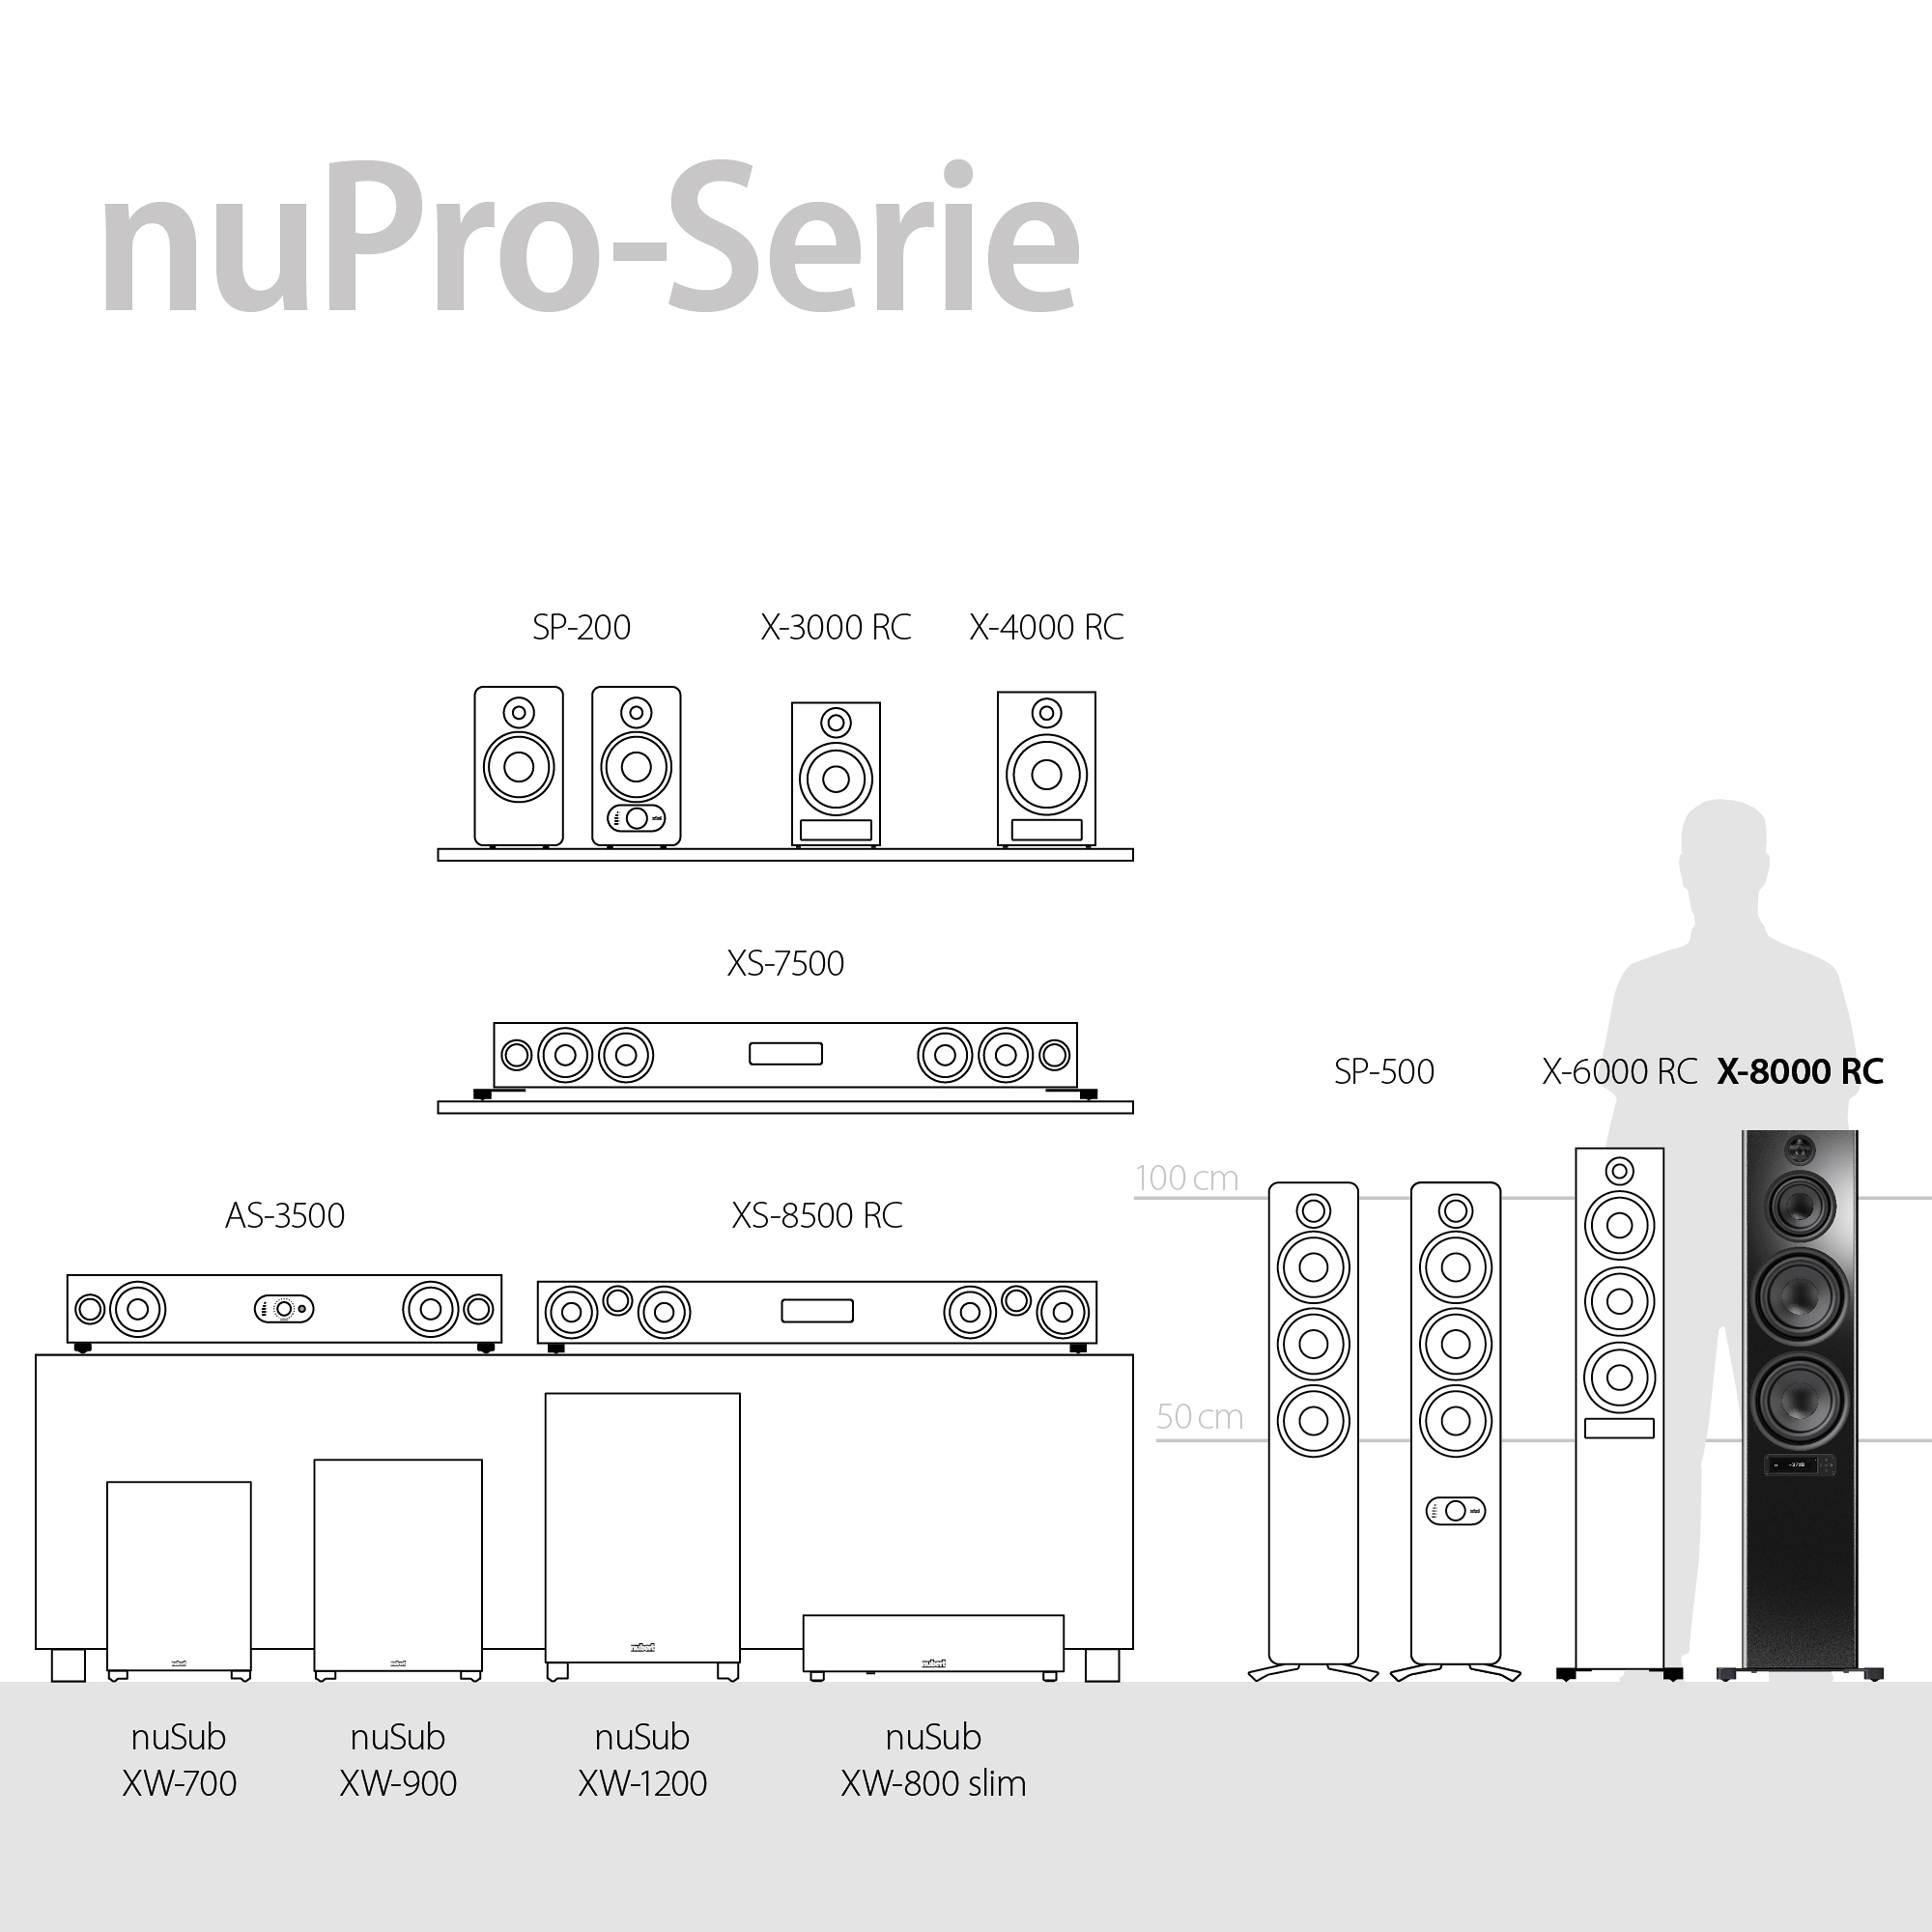 nuPro X-8000 RC Serienüberblick